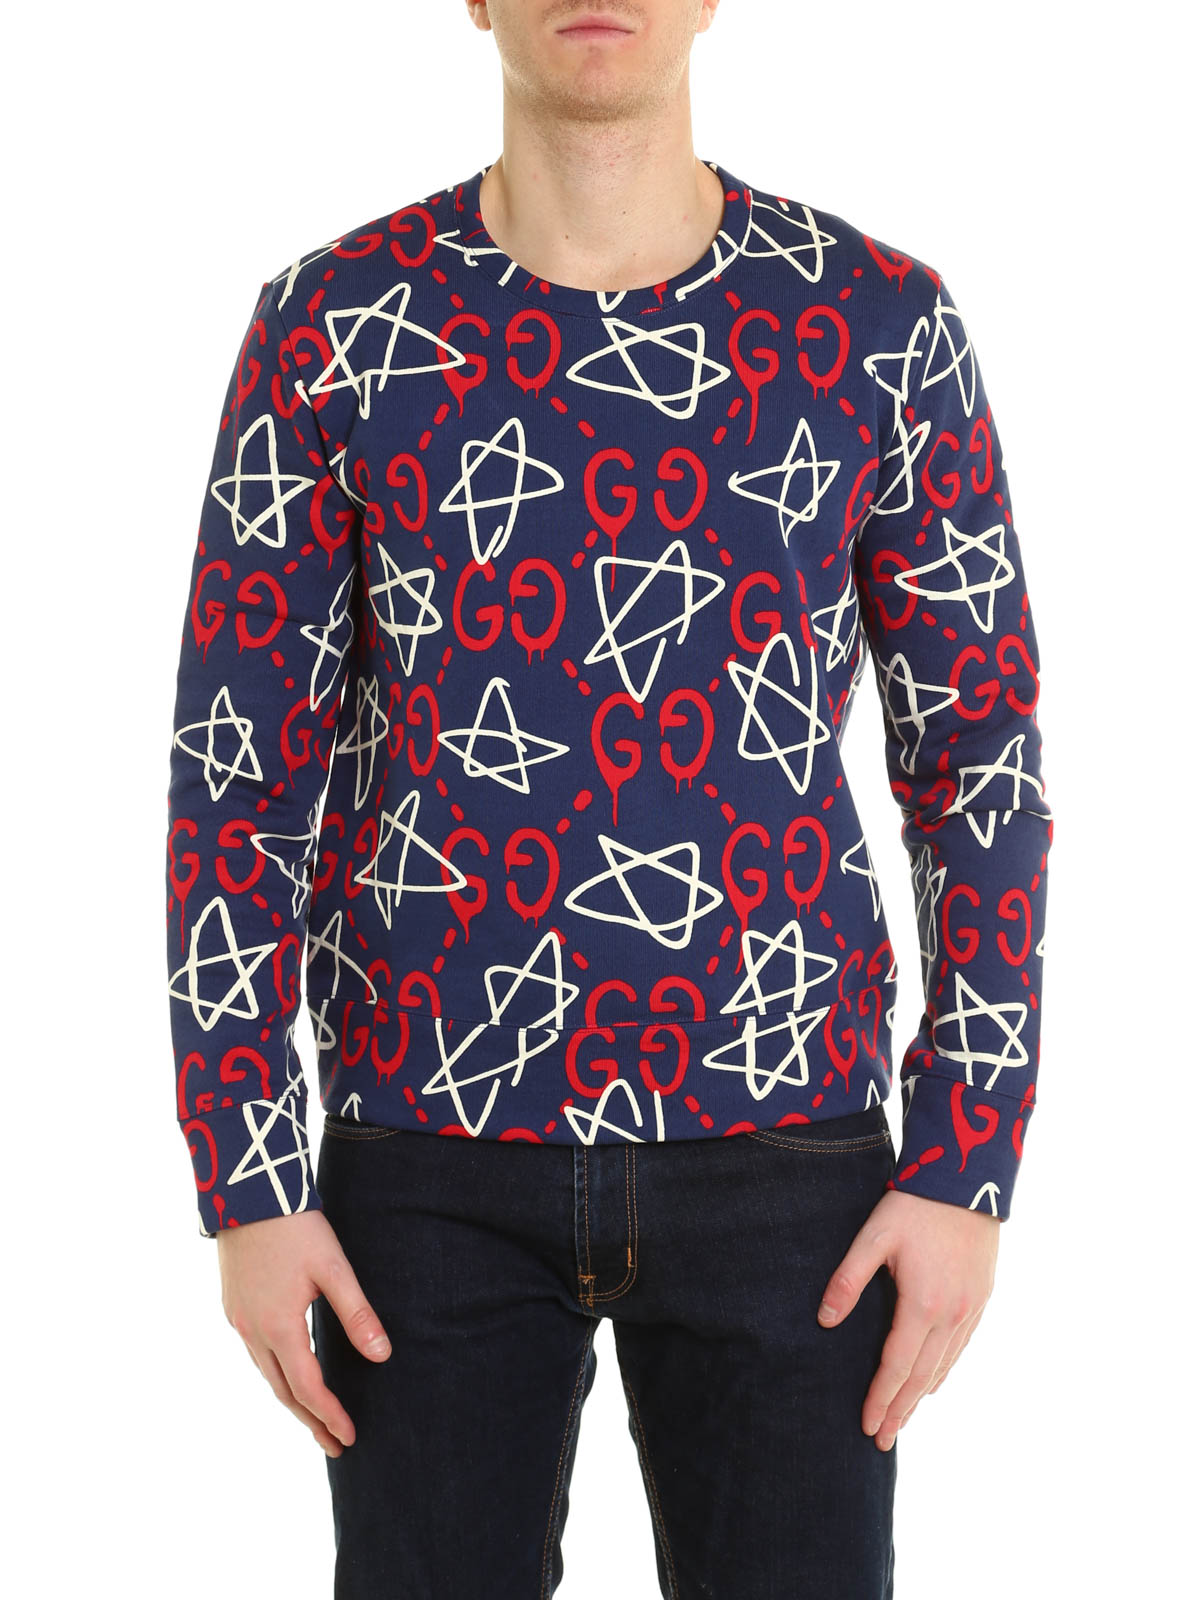 Gucci - GucciGhost print sweatshirt 